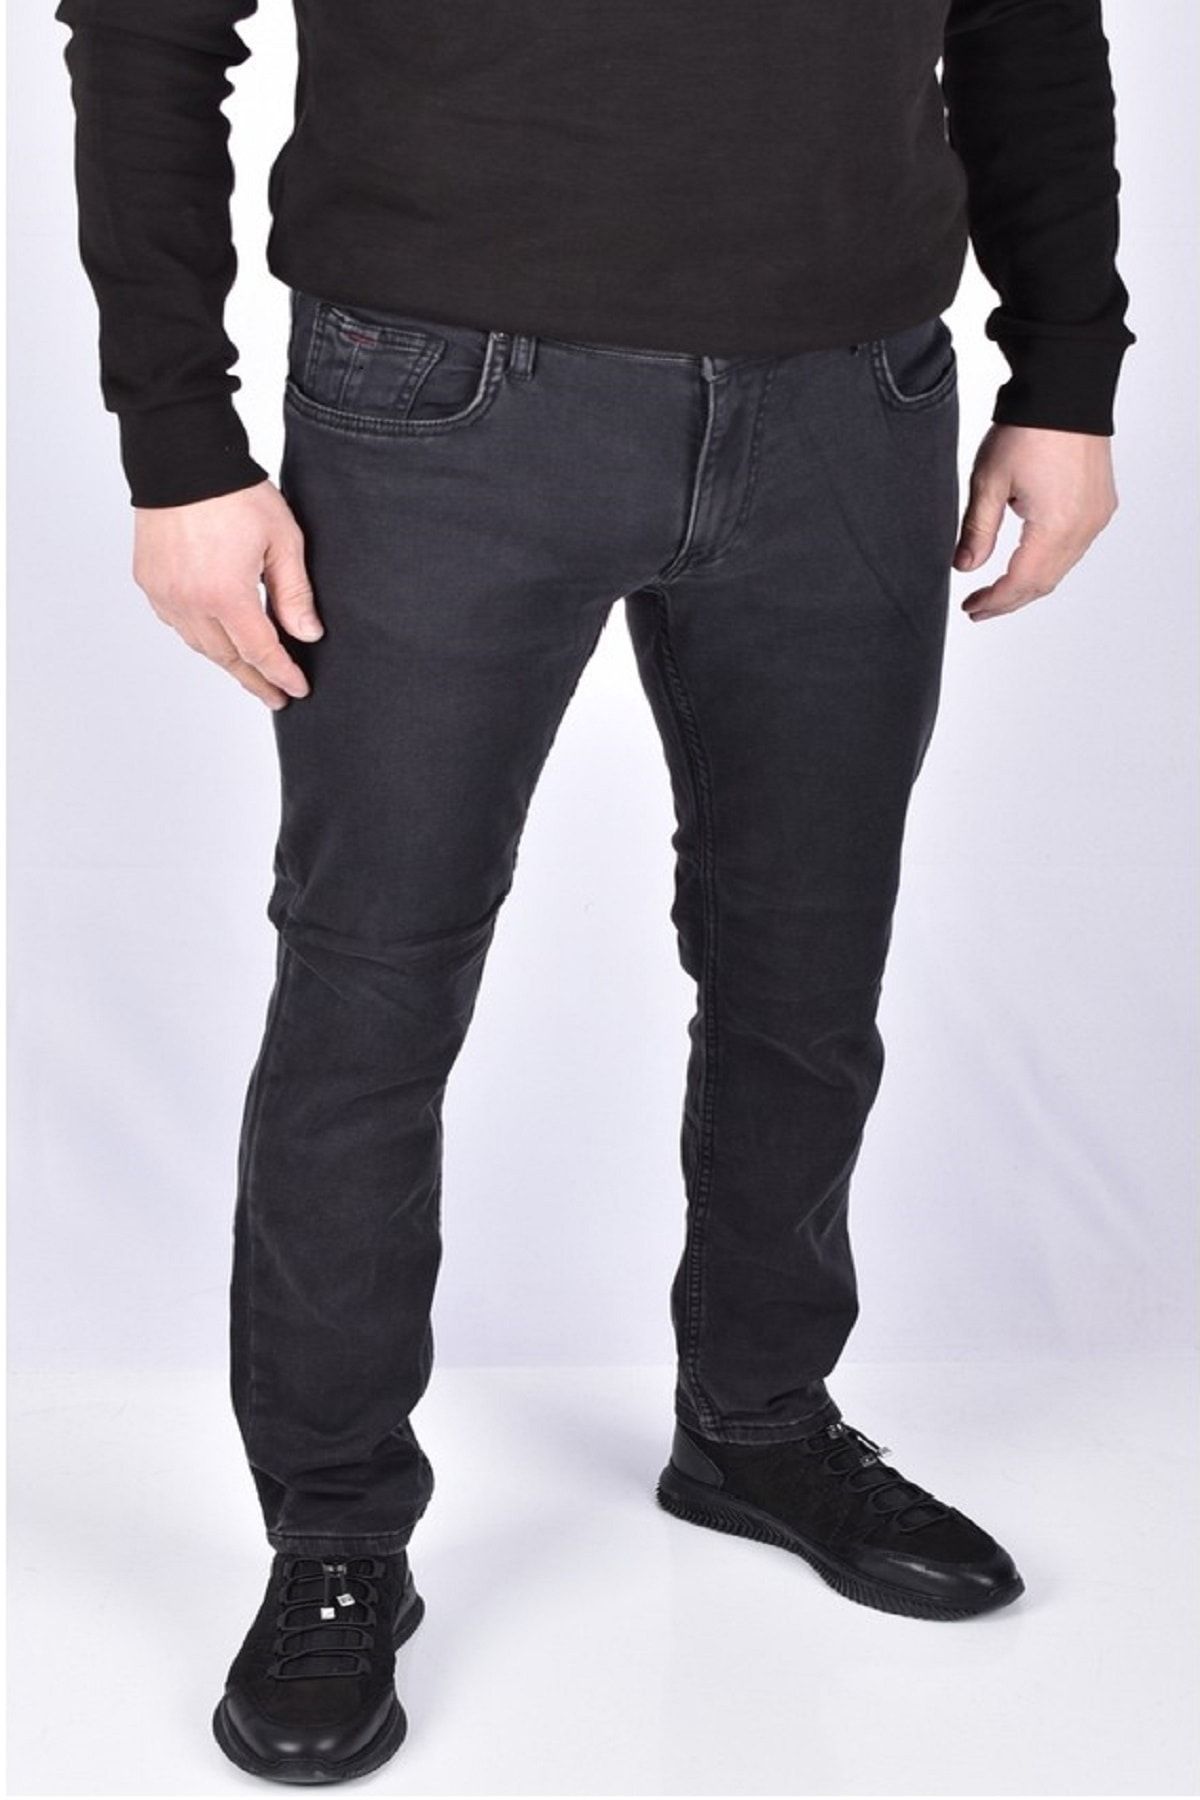 Twister Jeans Erkek Slim Fit, Normal Bel, Dar Paça Yeni Nesil Kot Pantolon Panama 640-03 Black